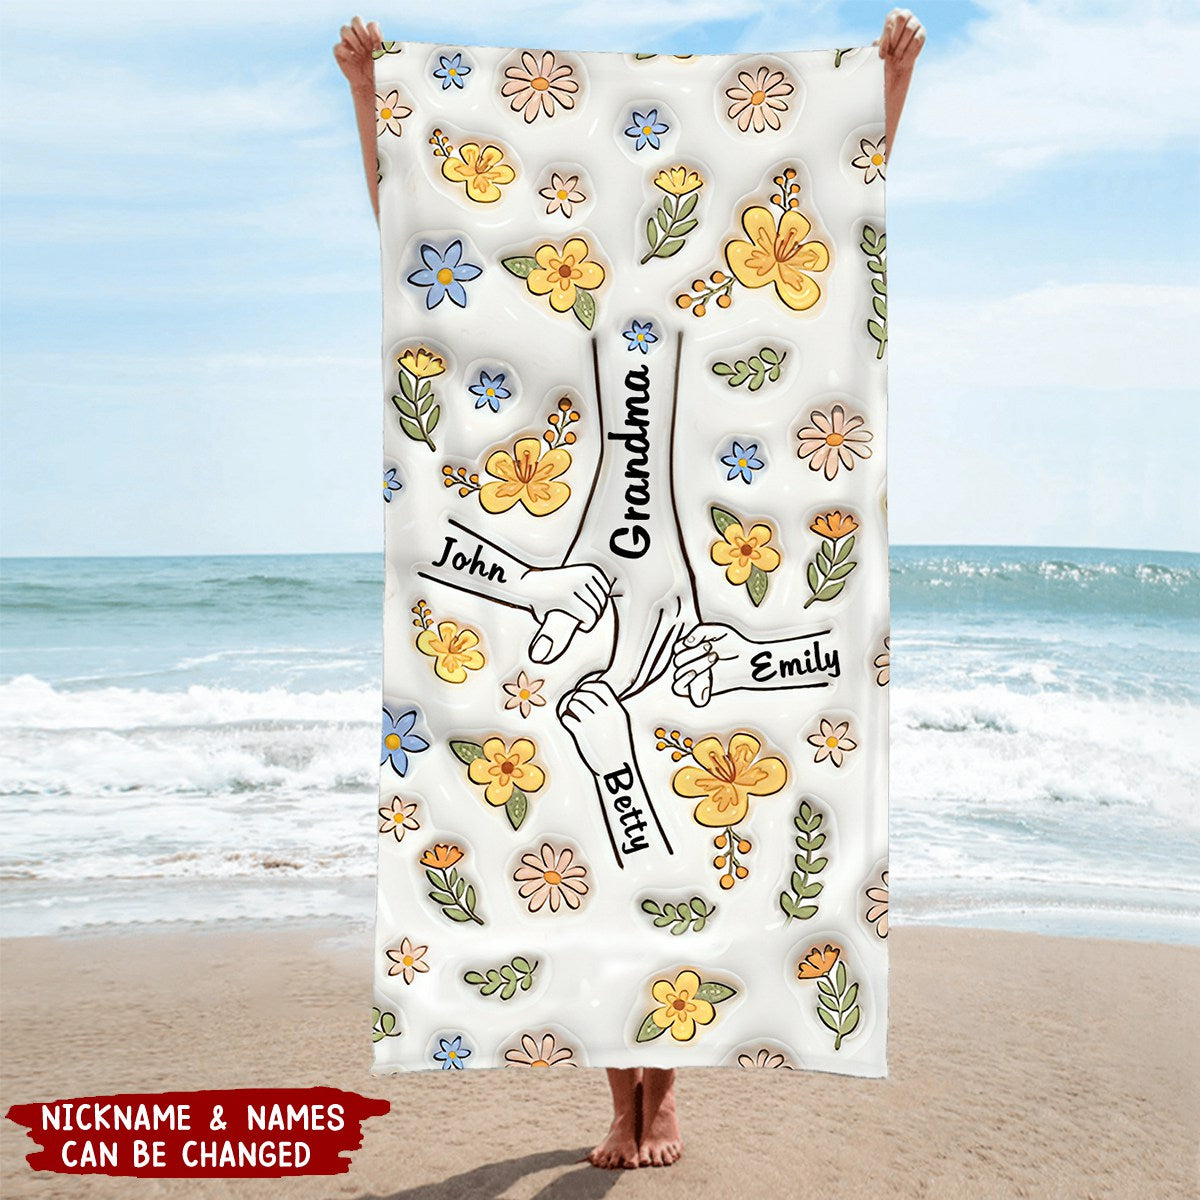 Wonderful Summer With Grandma - Family Personalized Custom Beach Towel - Summer Vacation Gift For Grandma